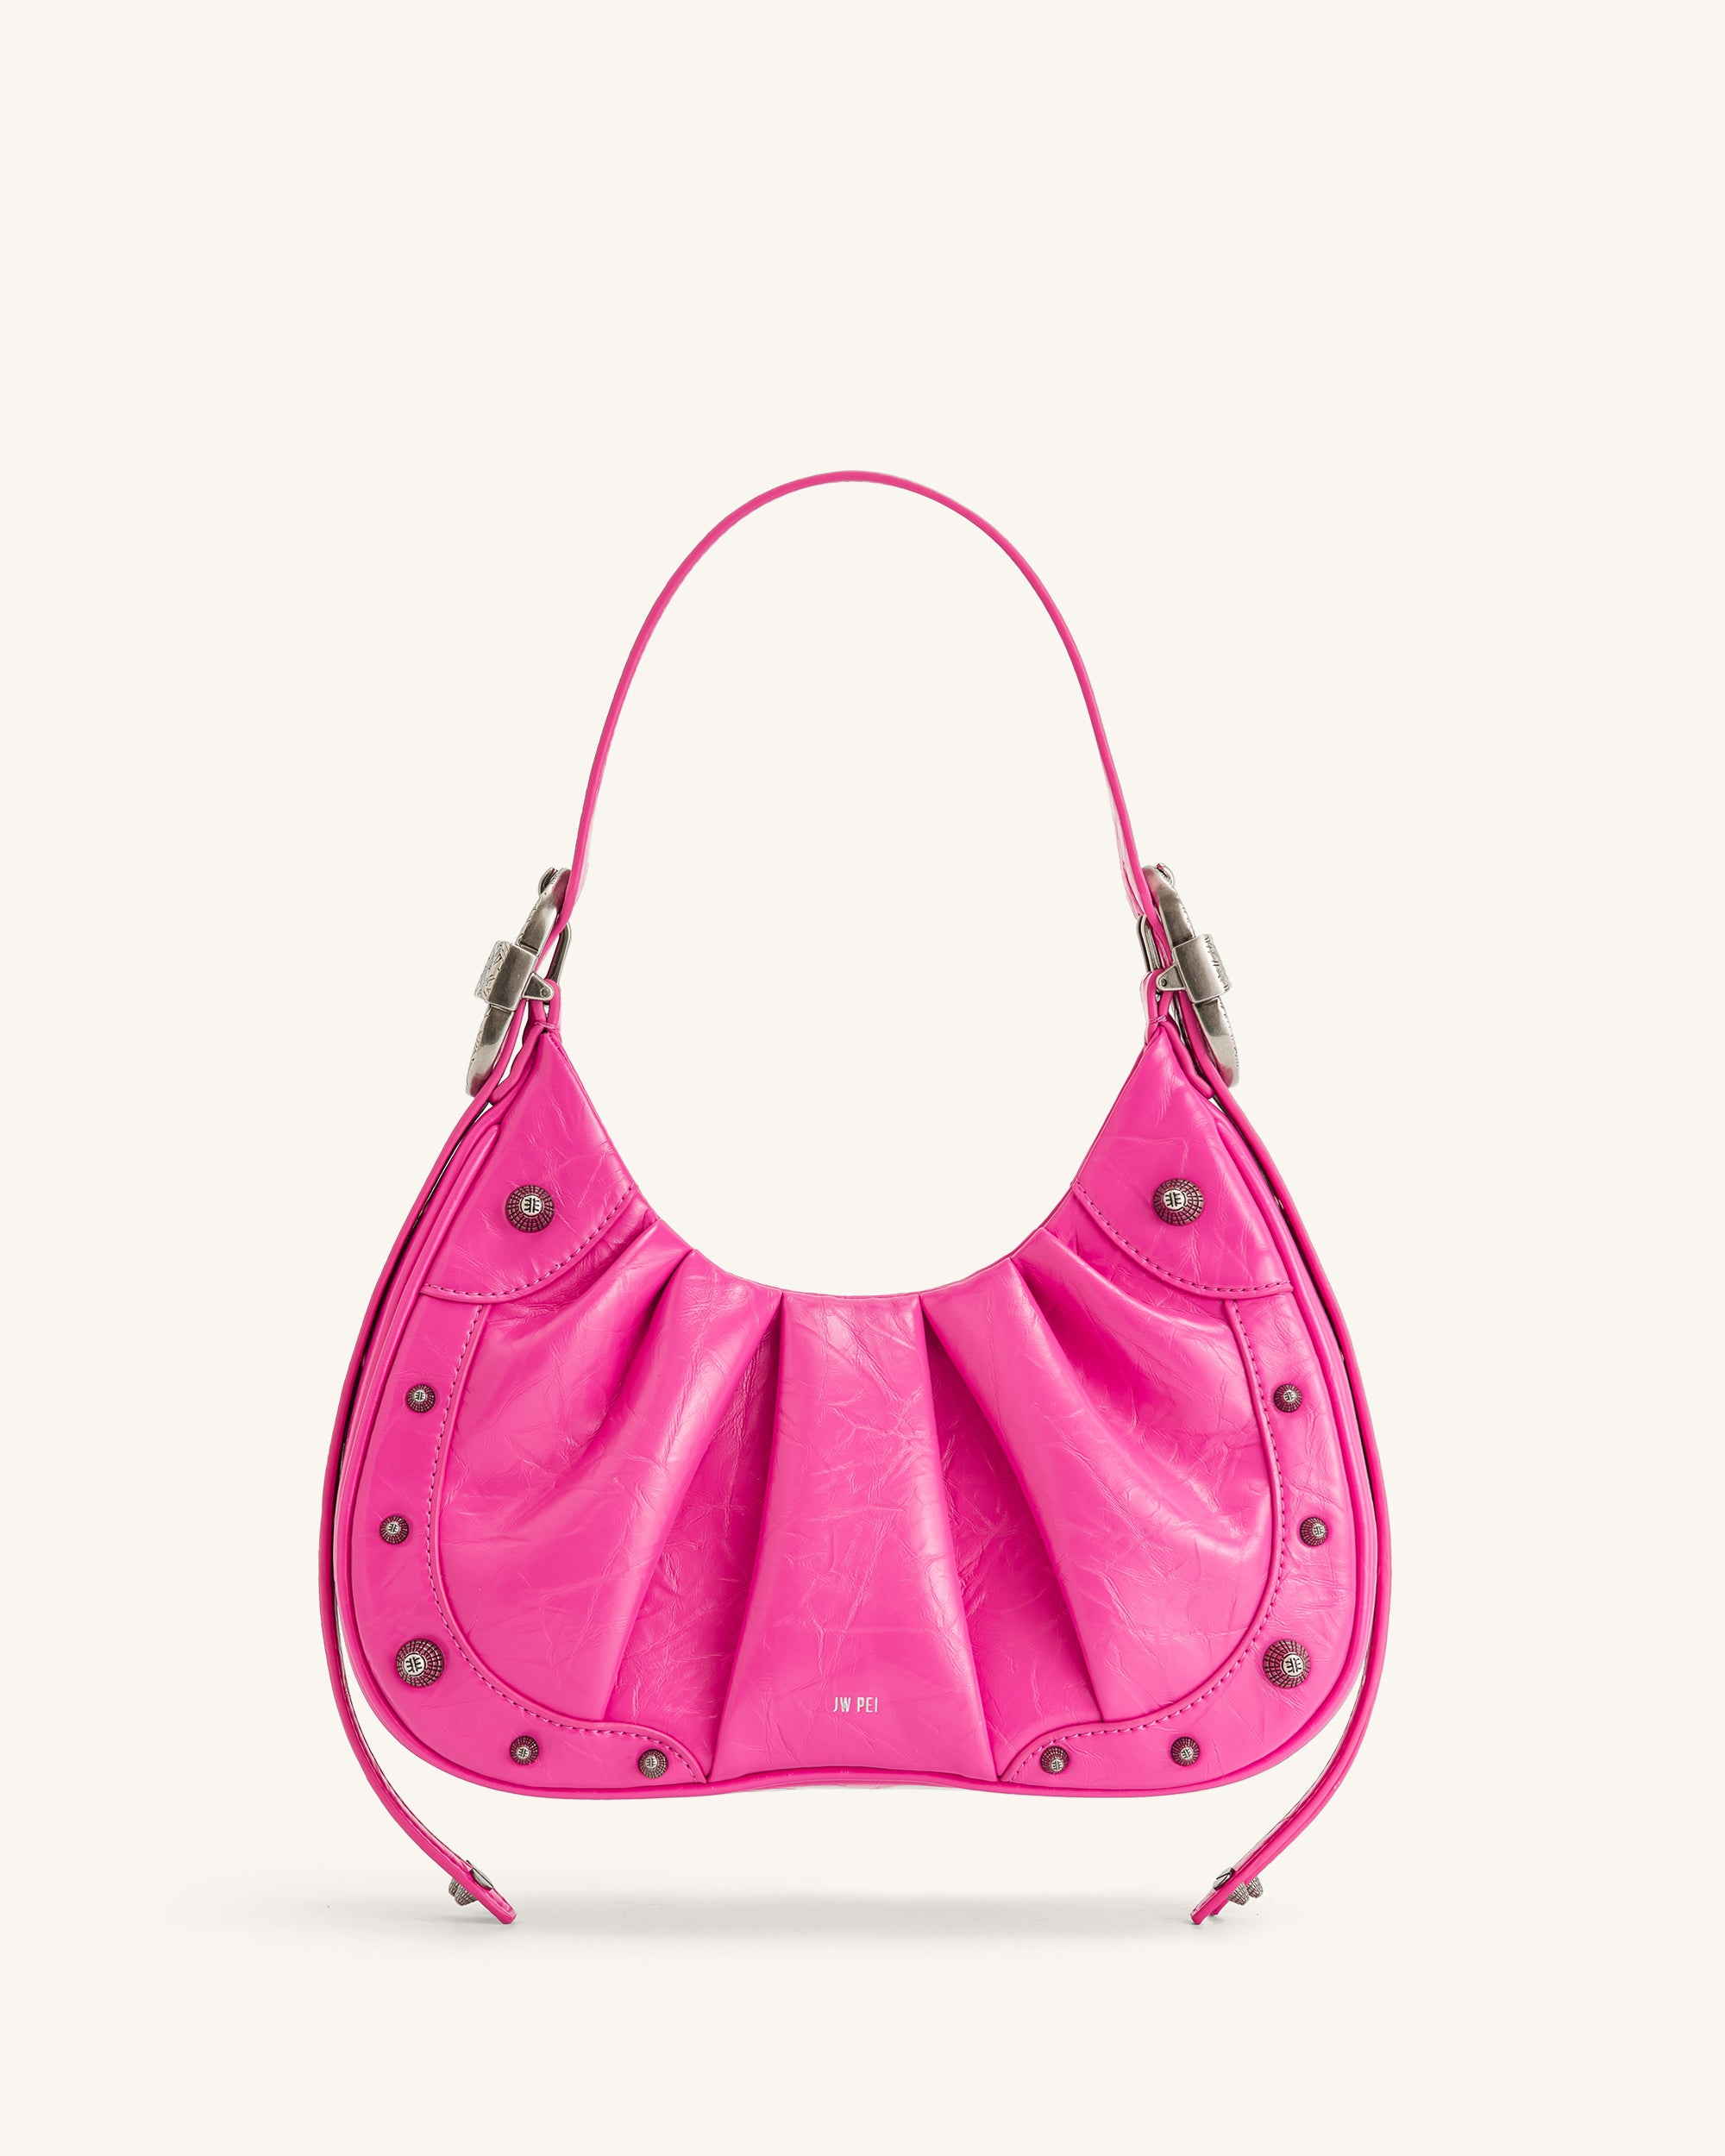 JW PEI + Gabbi Bag in Pink